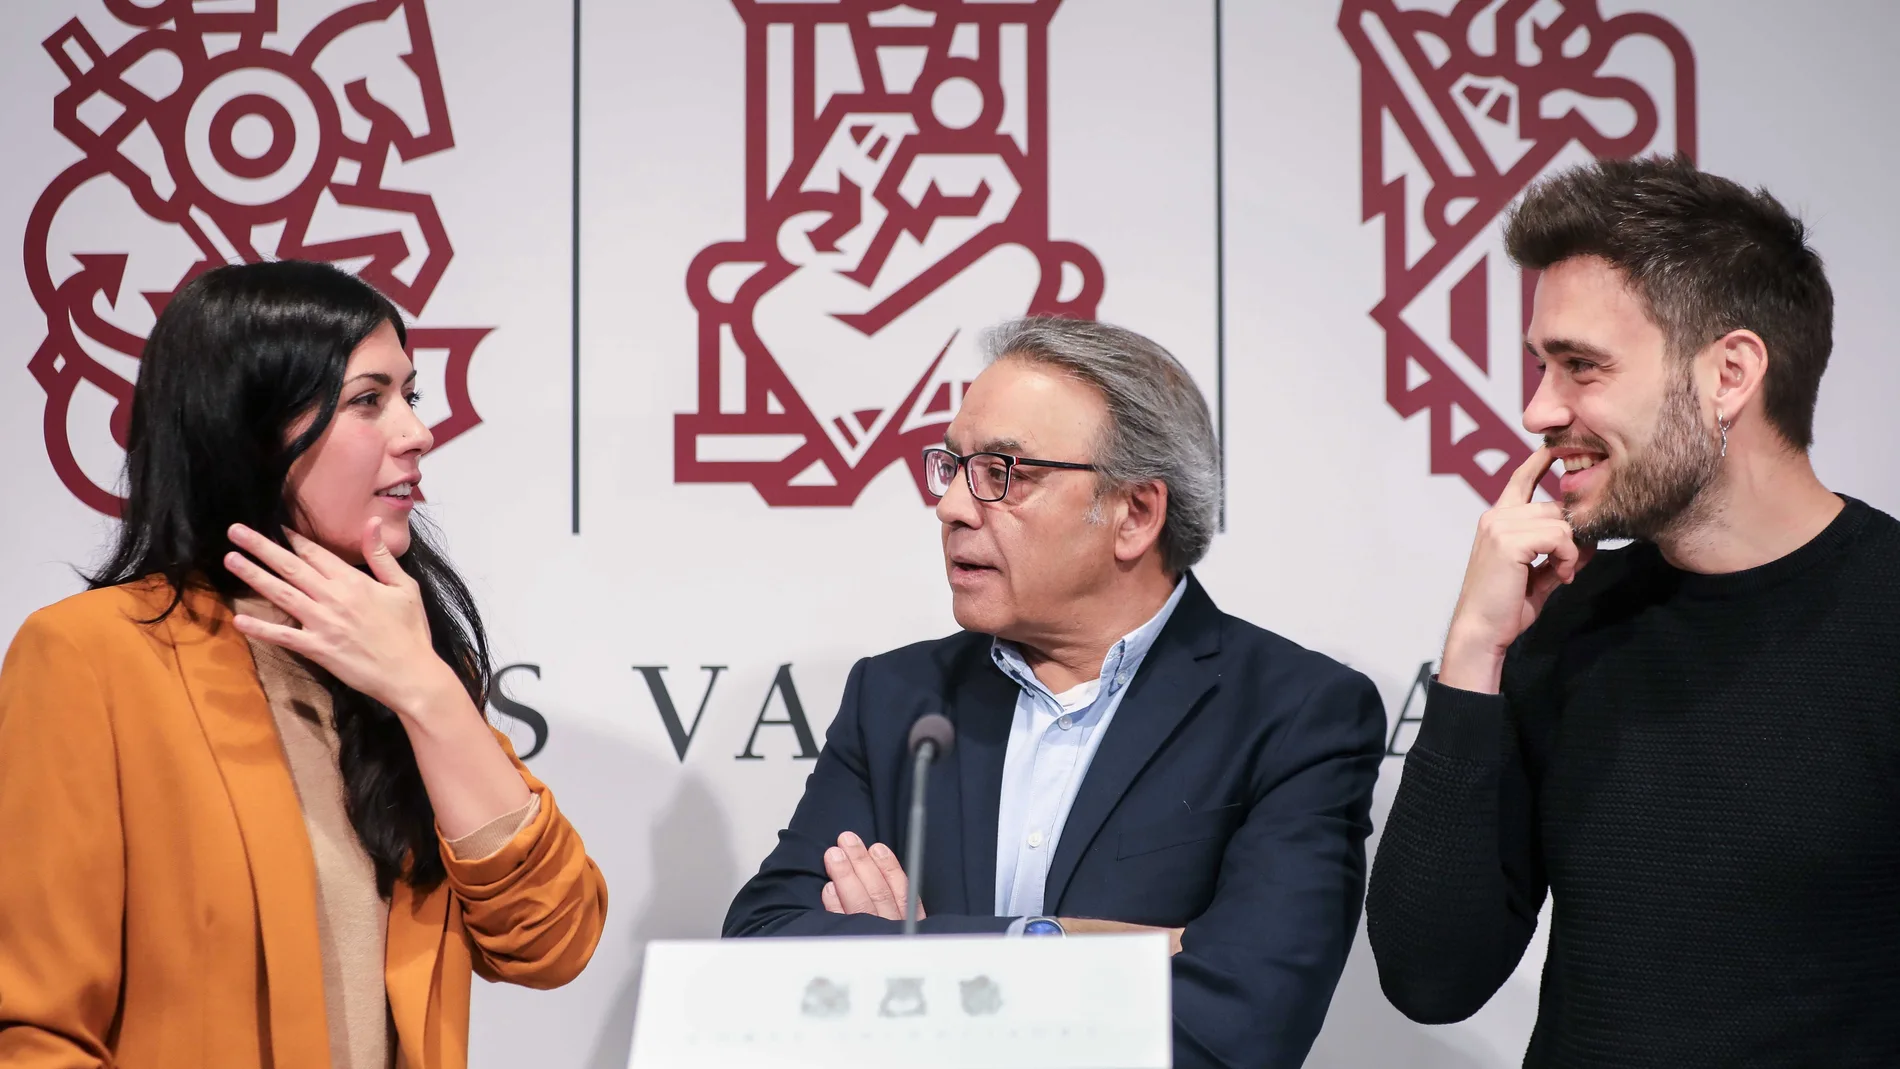 Naiara Davó de Unides Podem, Manuel Mata del PSPV y Fran Ferri de Compromís, anunciaron ayer la presentación de una PNL para reclamar el IVA al Gobierno